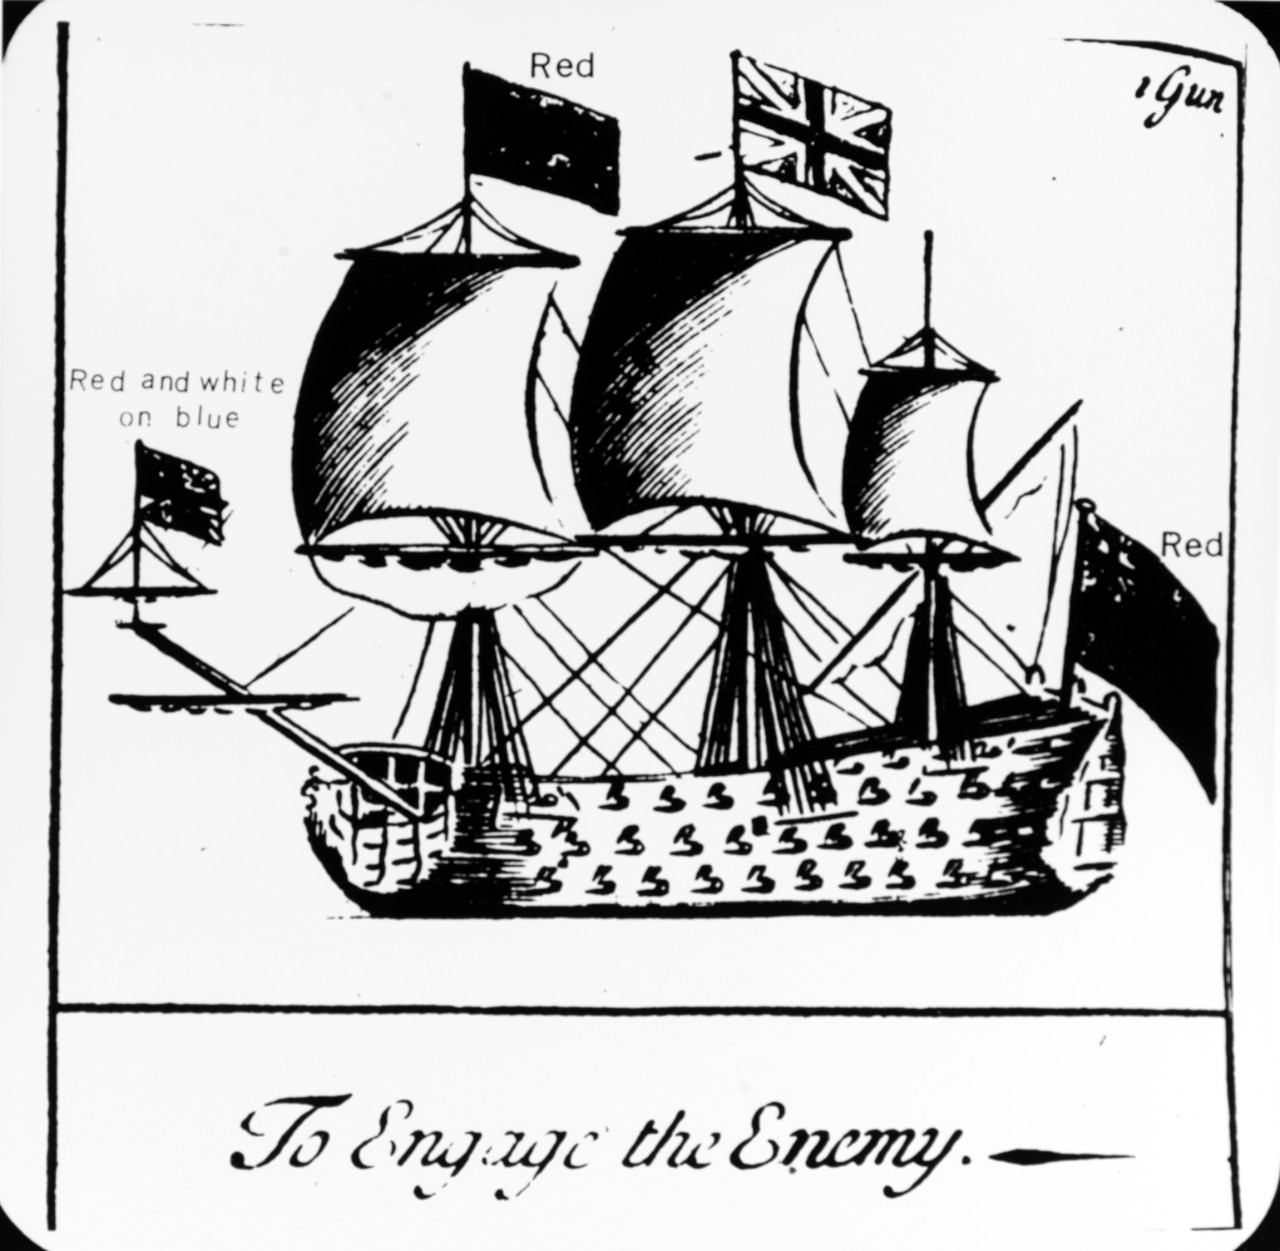 18th Century British navy signals